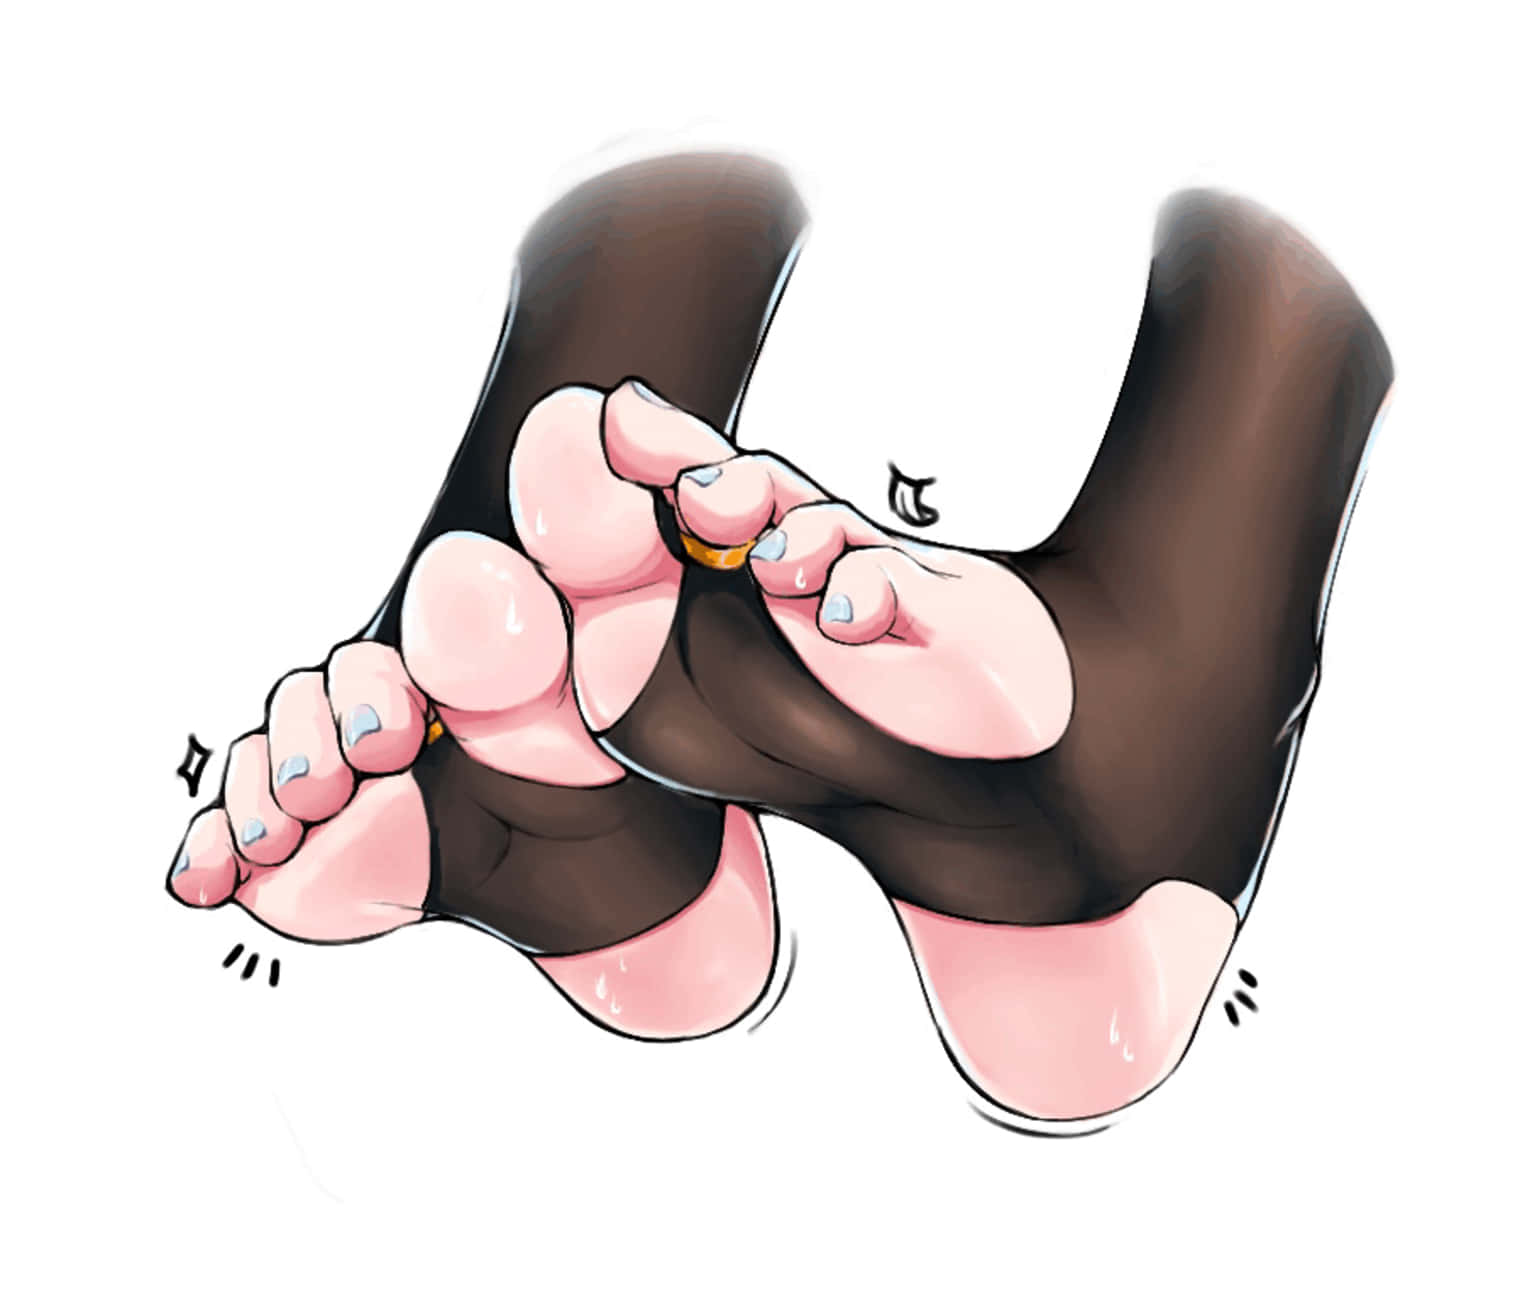 Girl Feet In Stylish Black Socks Digital Art Wallpaper